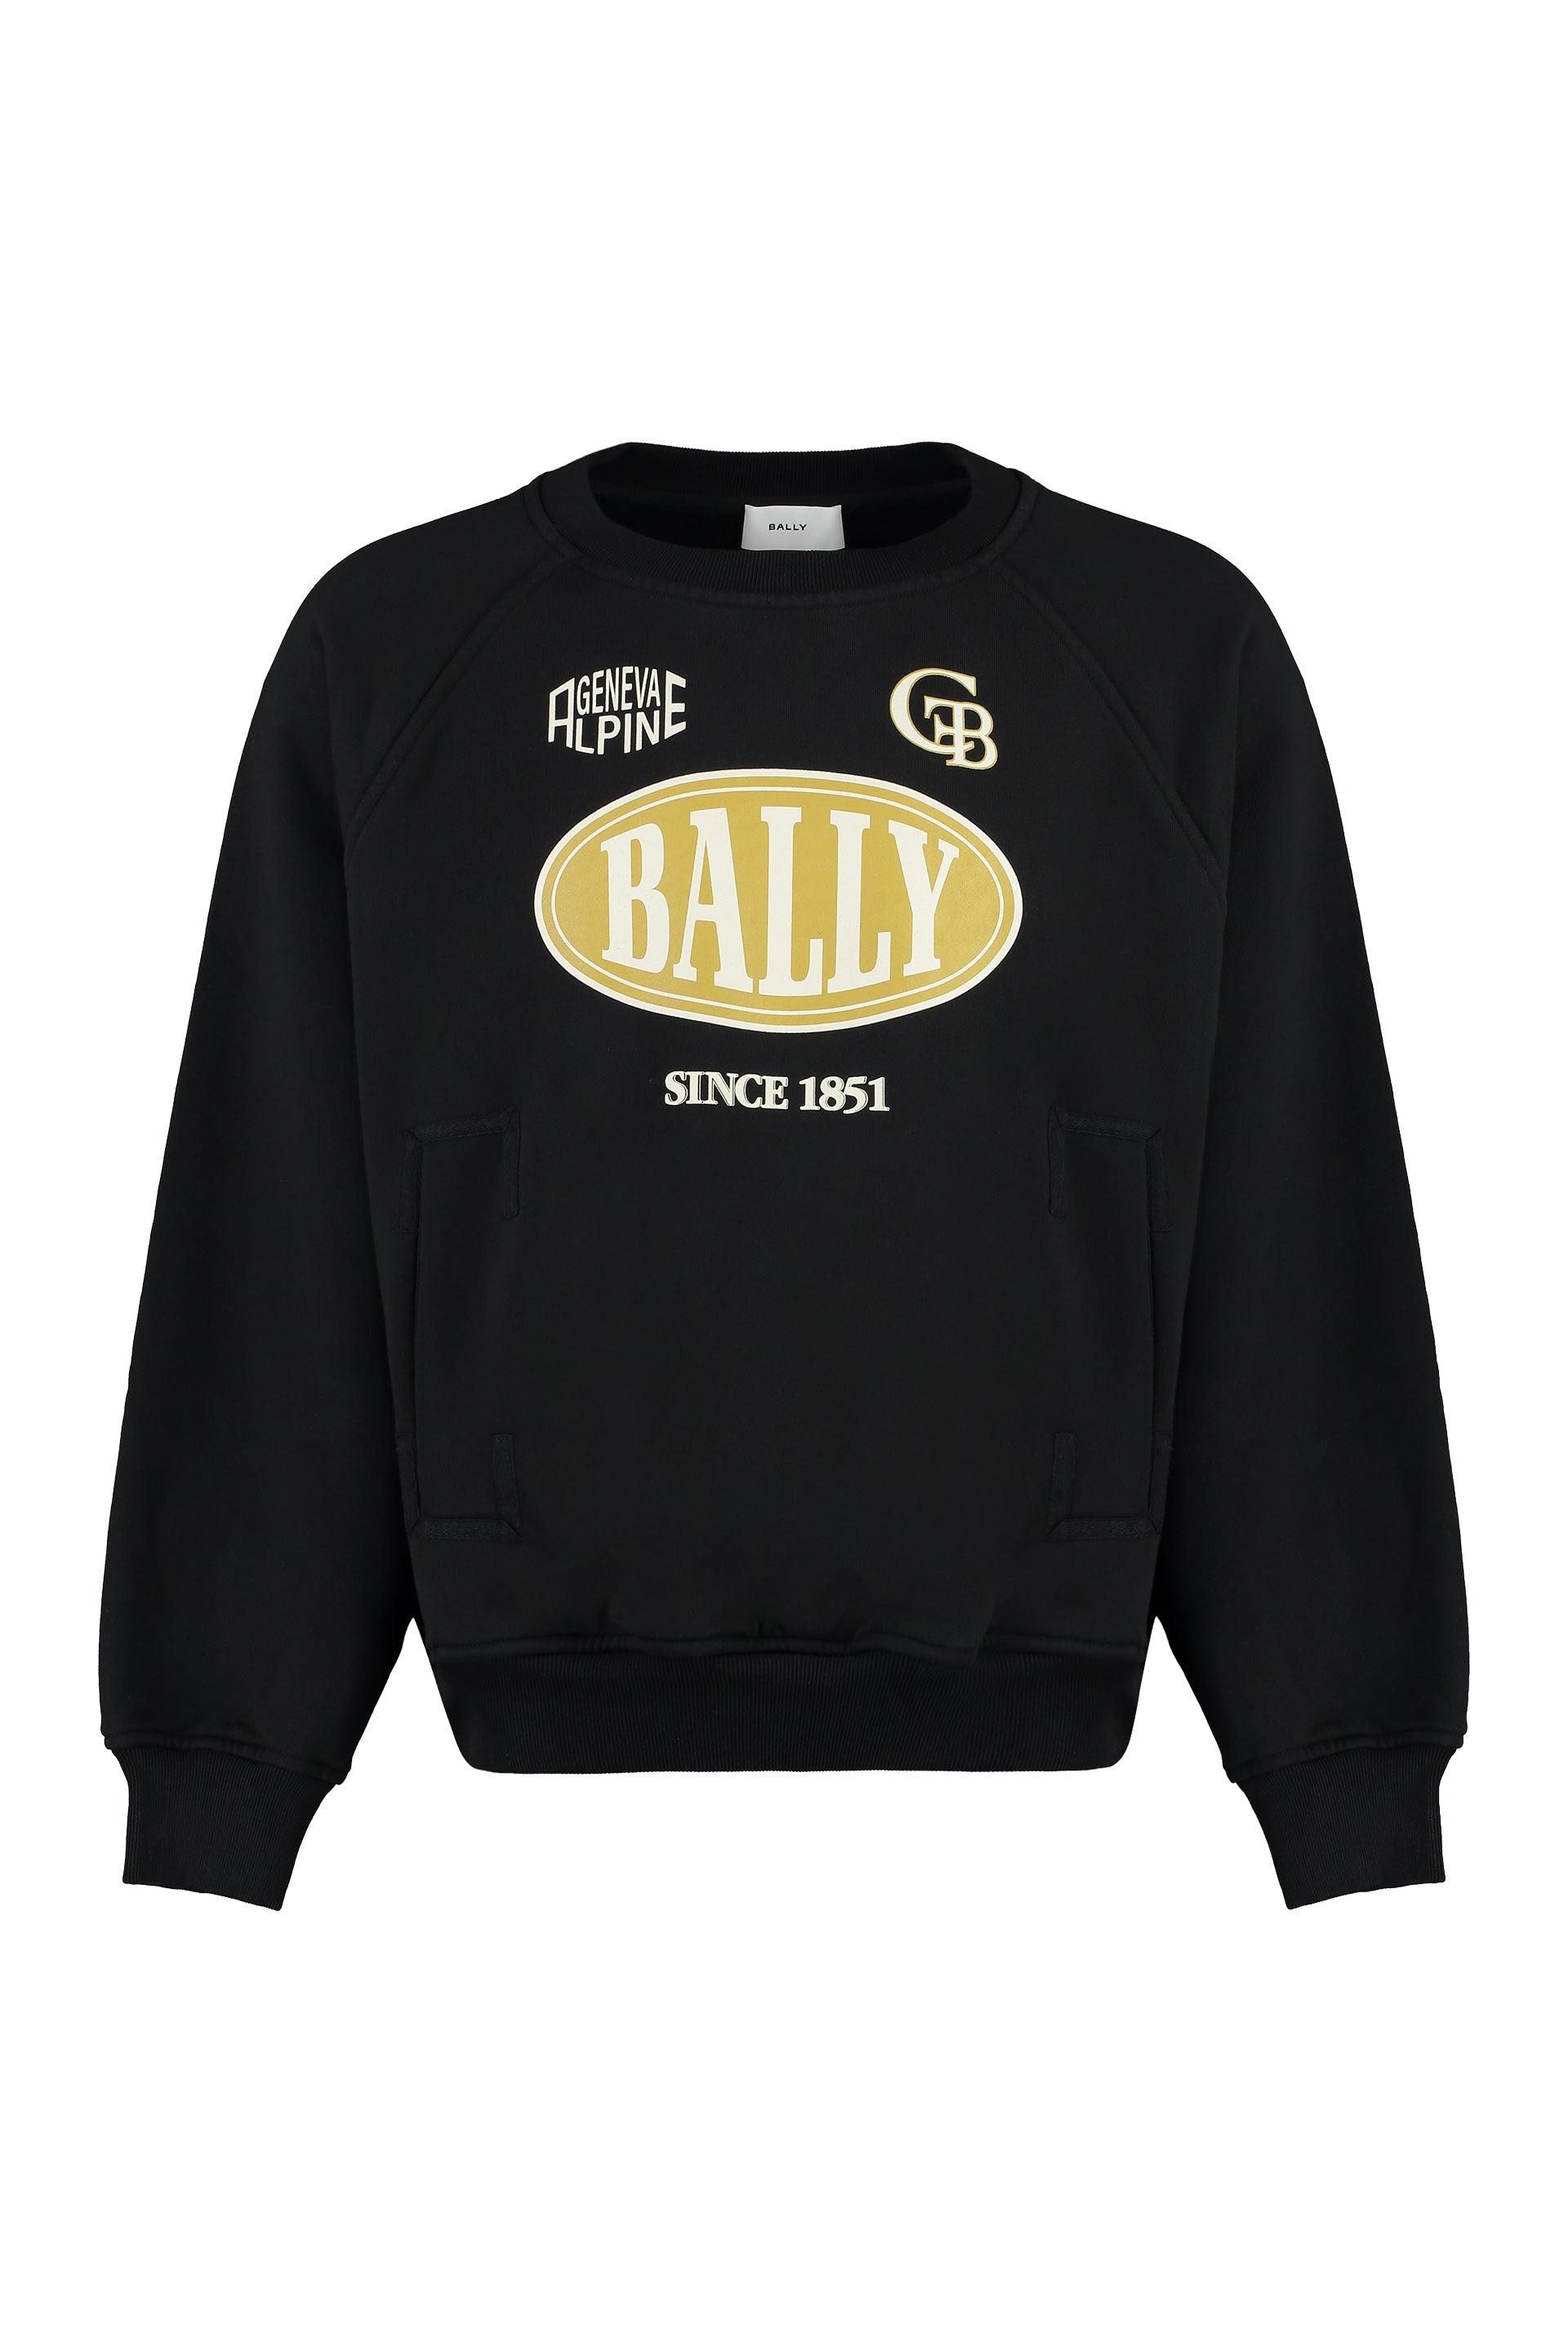 Bally Cotton Crew-neck Sweatshirt in Black for Men | Lyst